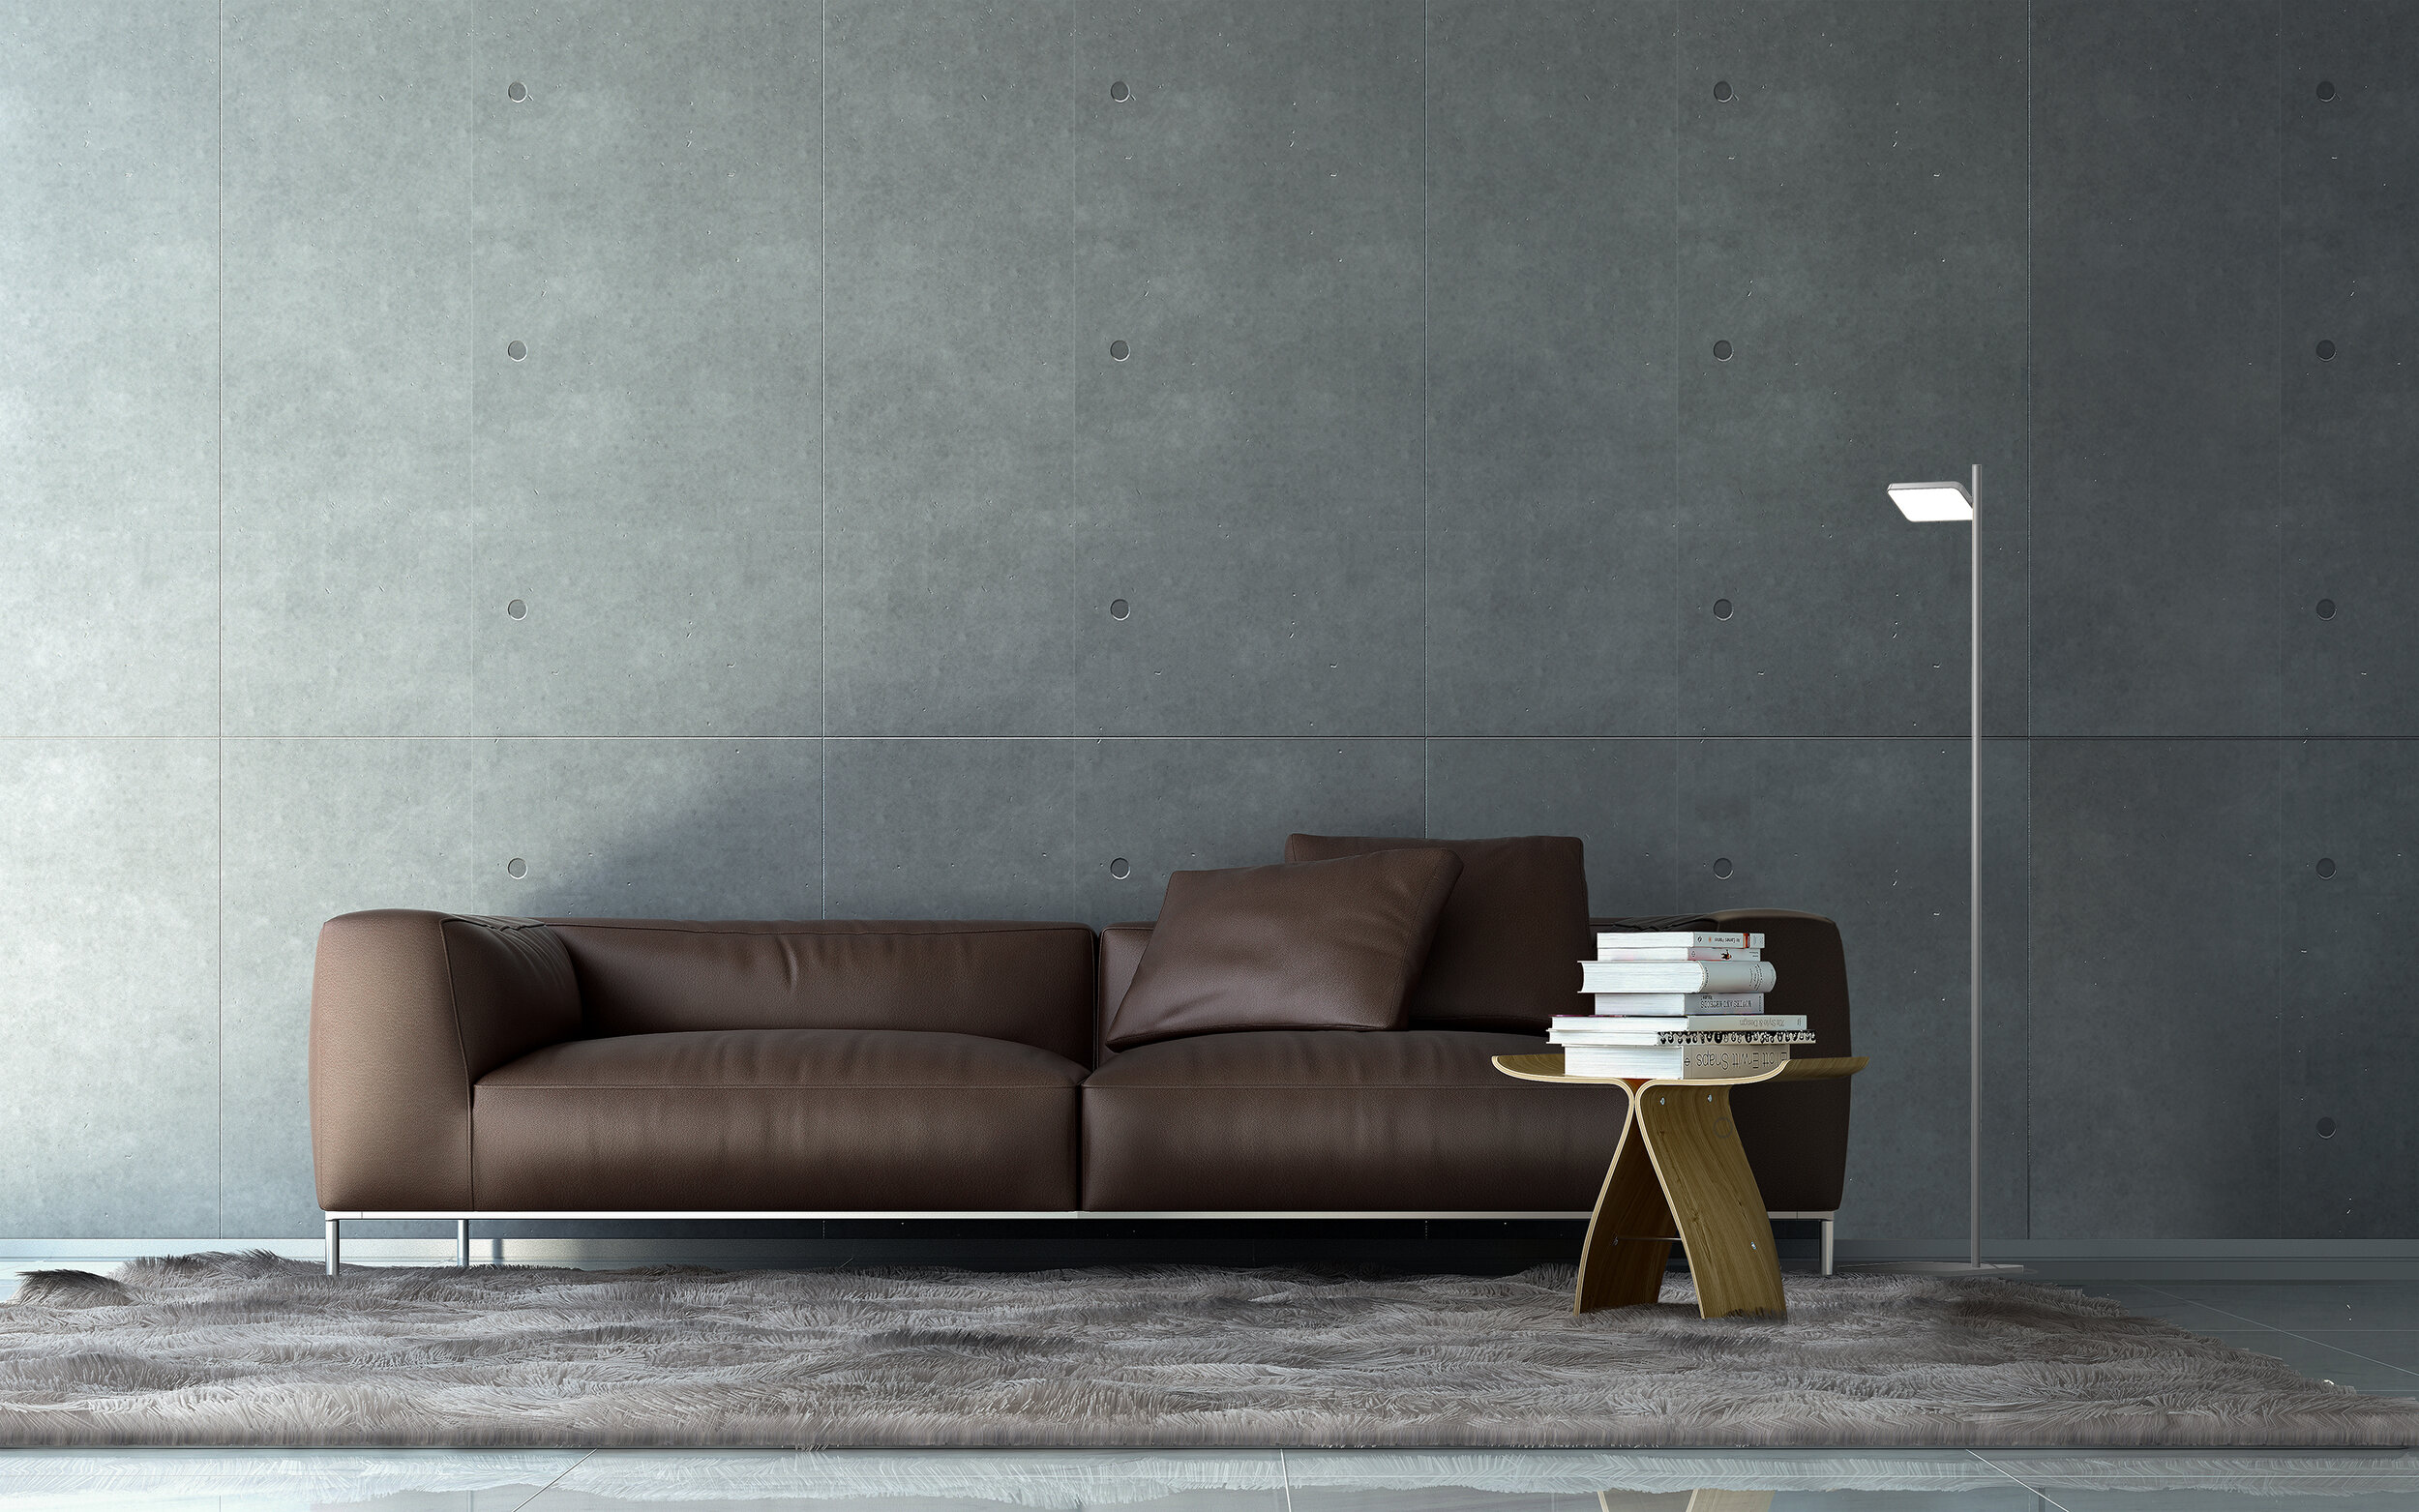 Pablo Designs_Talia Floor Grey_Big Sofa Environmental Image_300.jpg